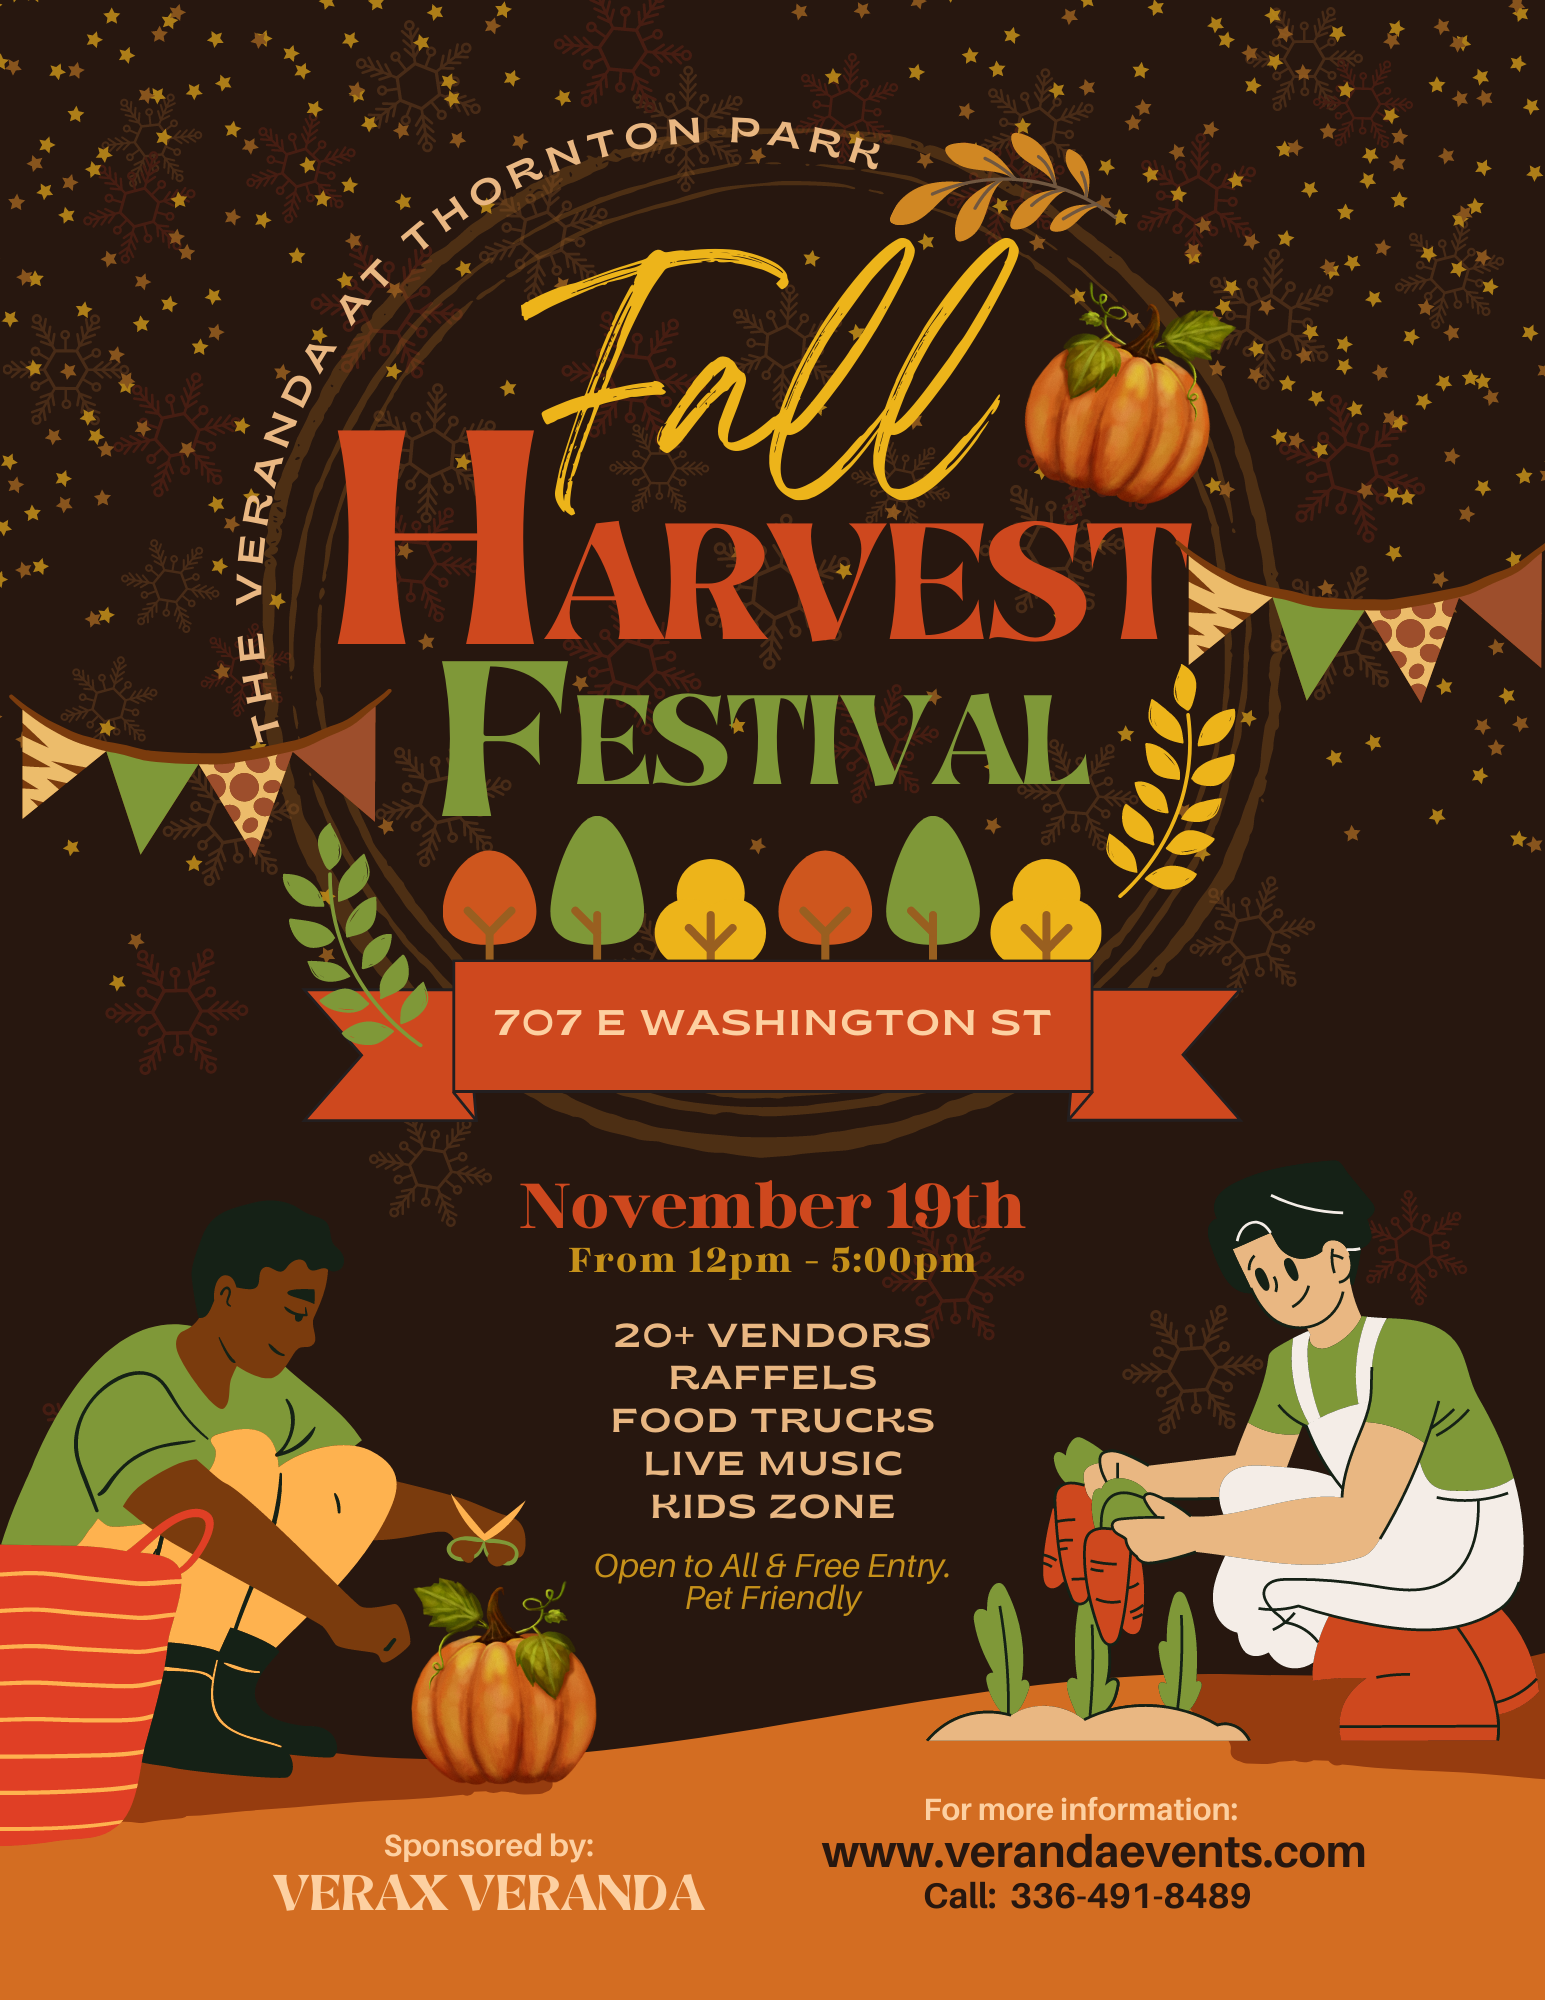 Fall Harvest Festival The Veranda at Thornton Park